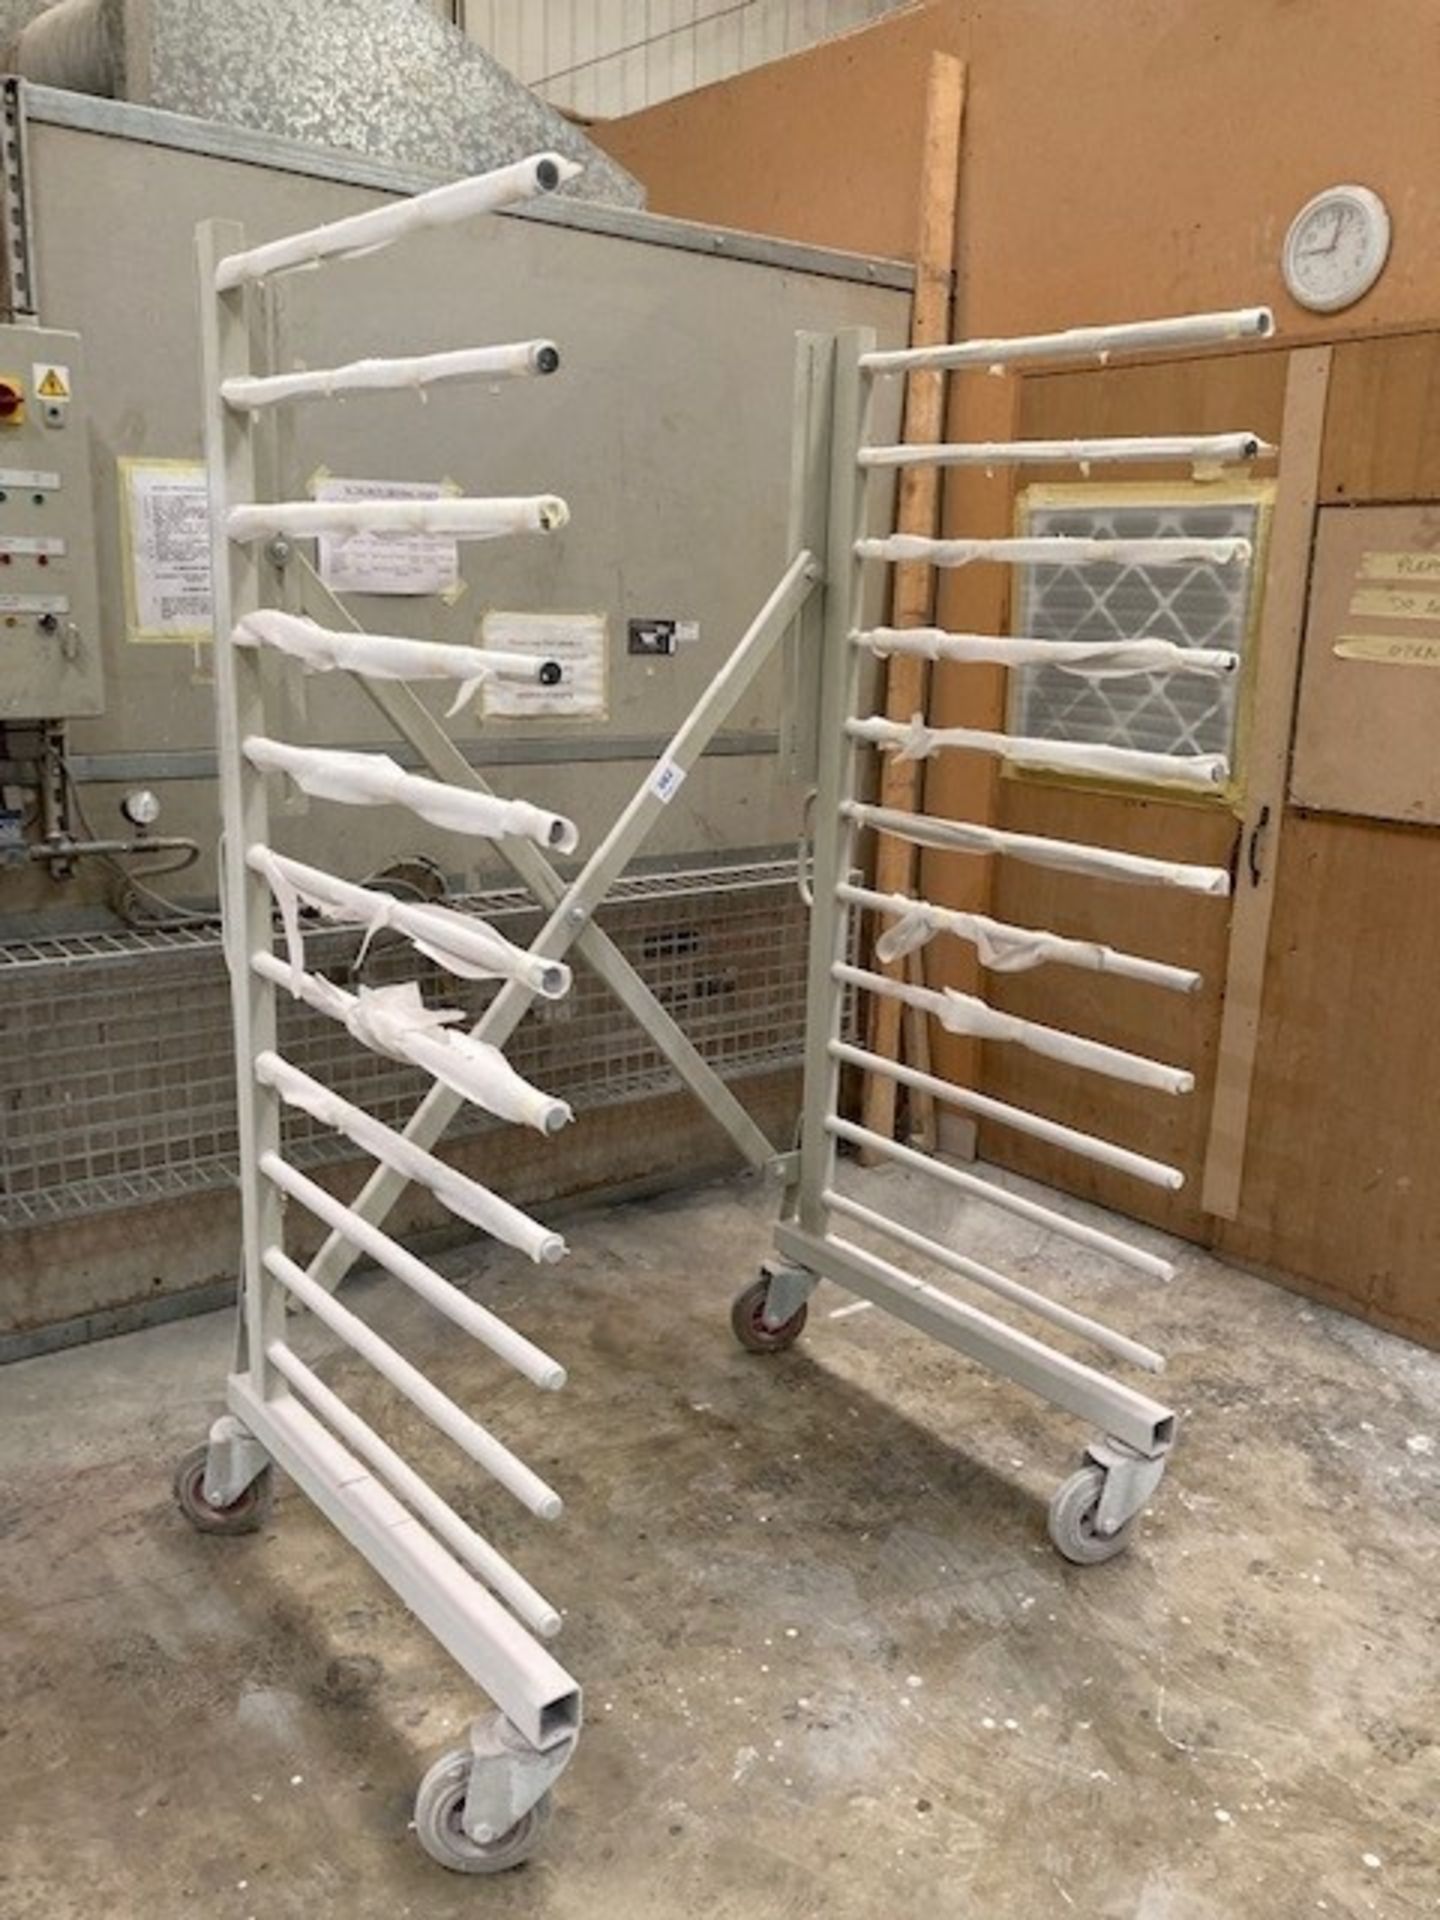 Eleven tier mobile steel expanding drying racks - Image 2 of 4